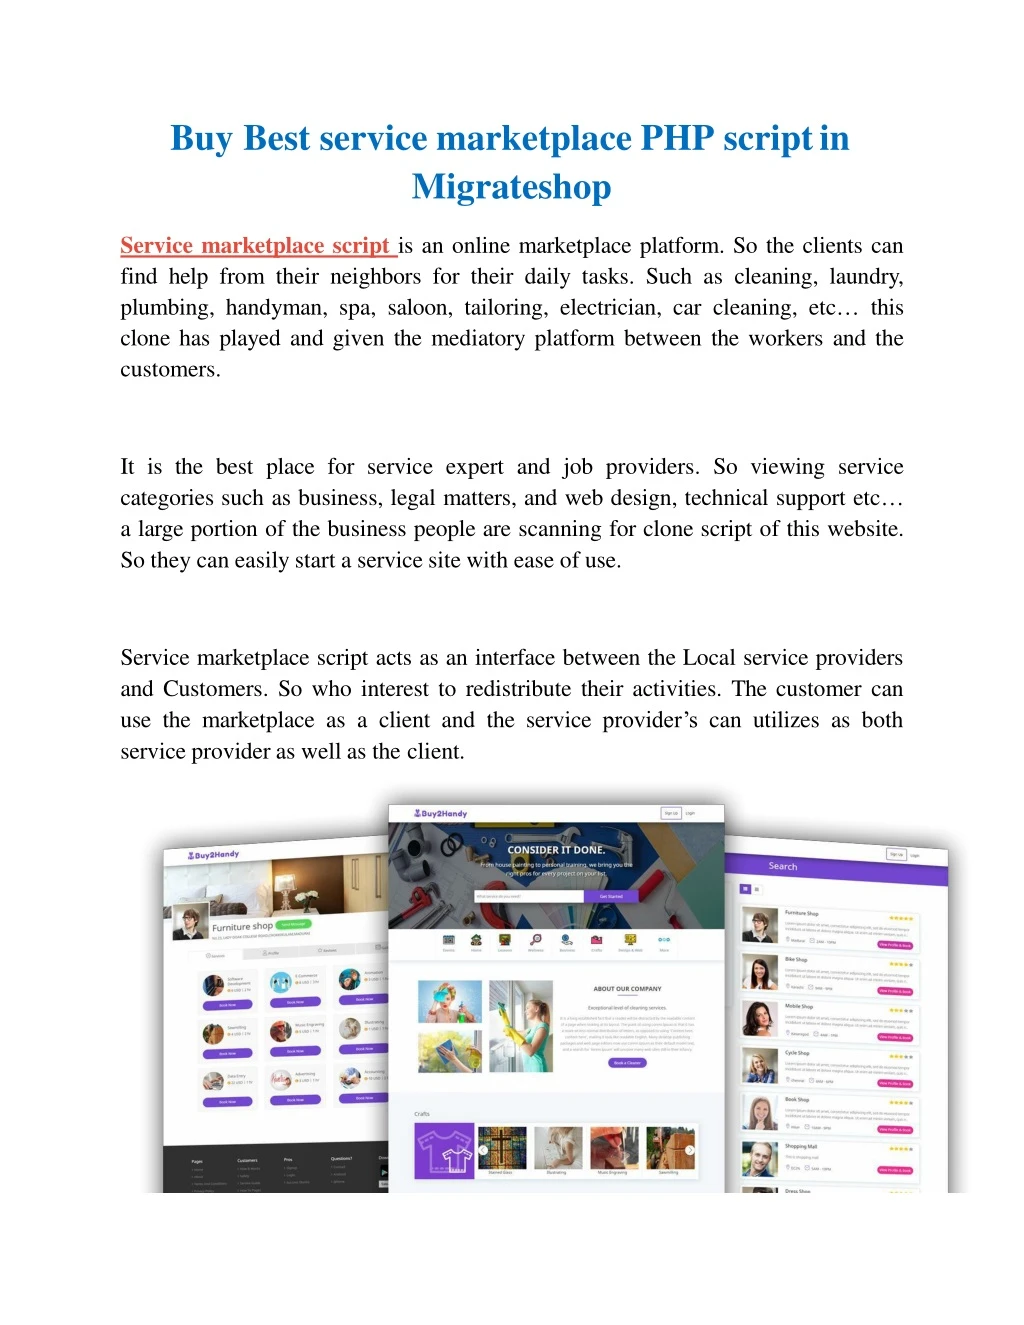 buy best service marketplace php script in migrateshop